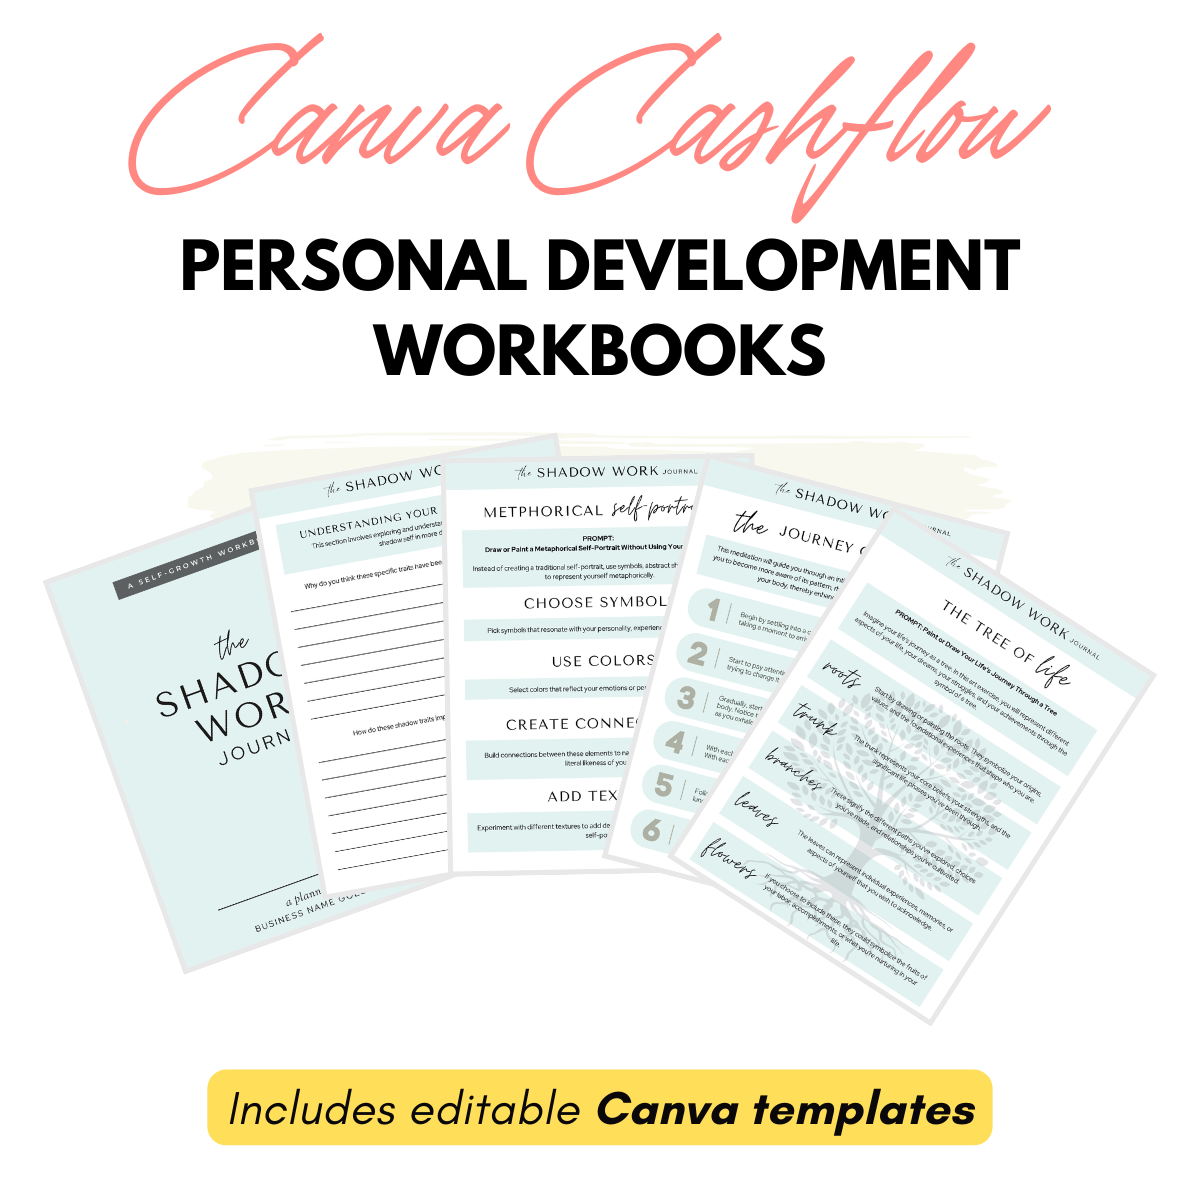 Canva Cashflow: Personal Growth Series